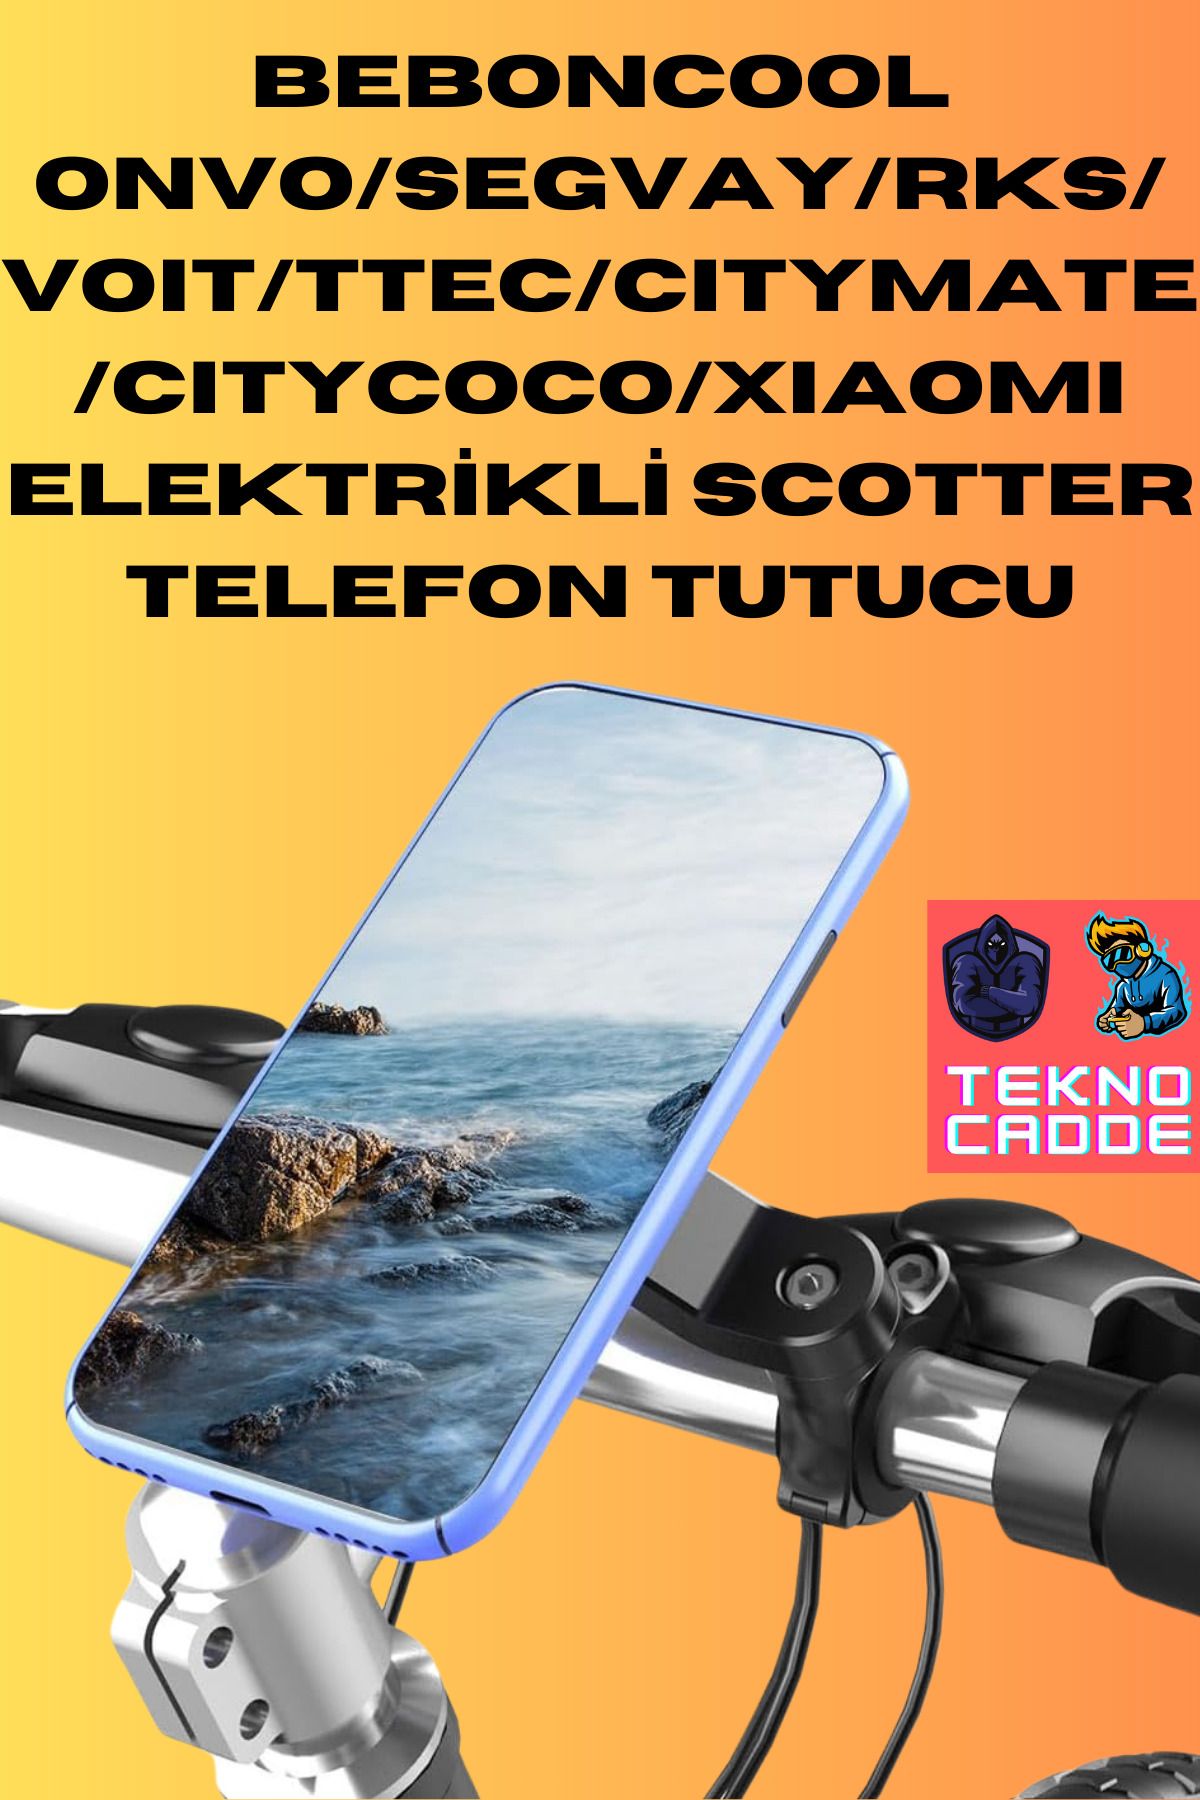 CAFELE Onvo/segvay/rks/voit/ttec/citymate/citycoco/xiaomi Elektrikli Scooter Telefon Tutucu